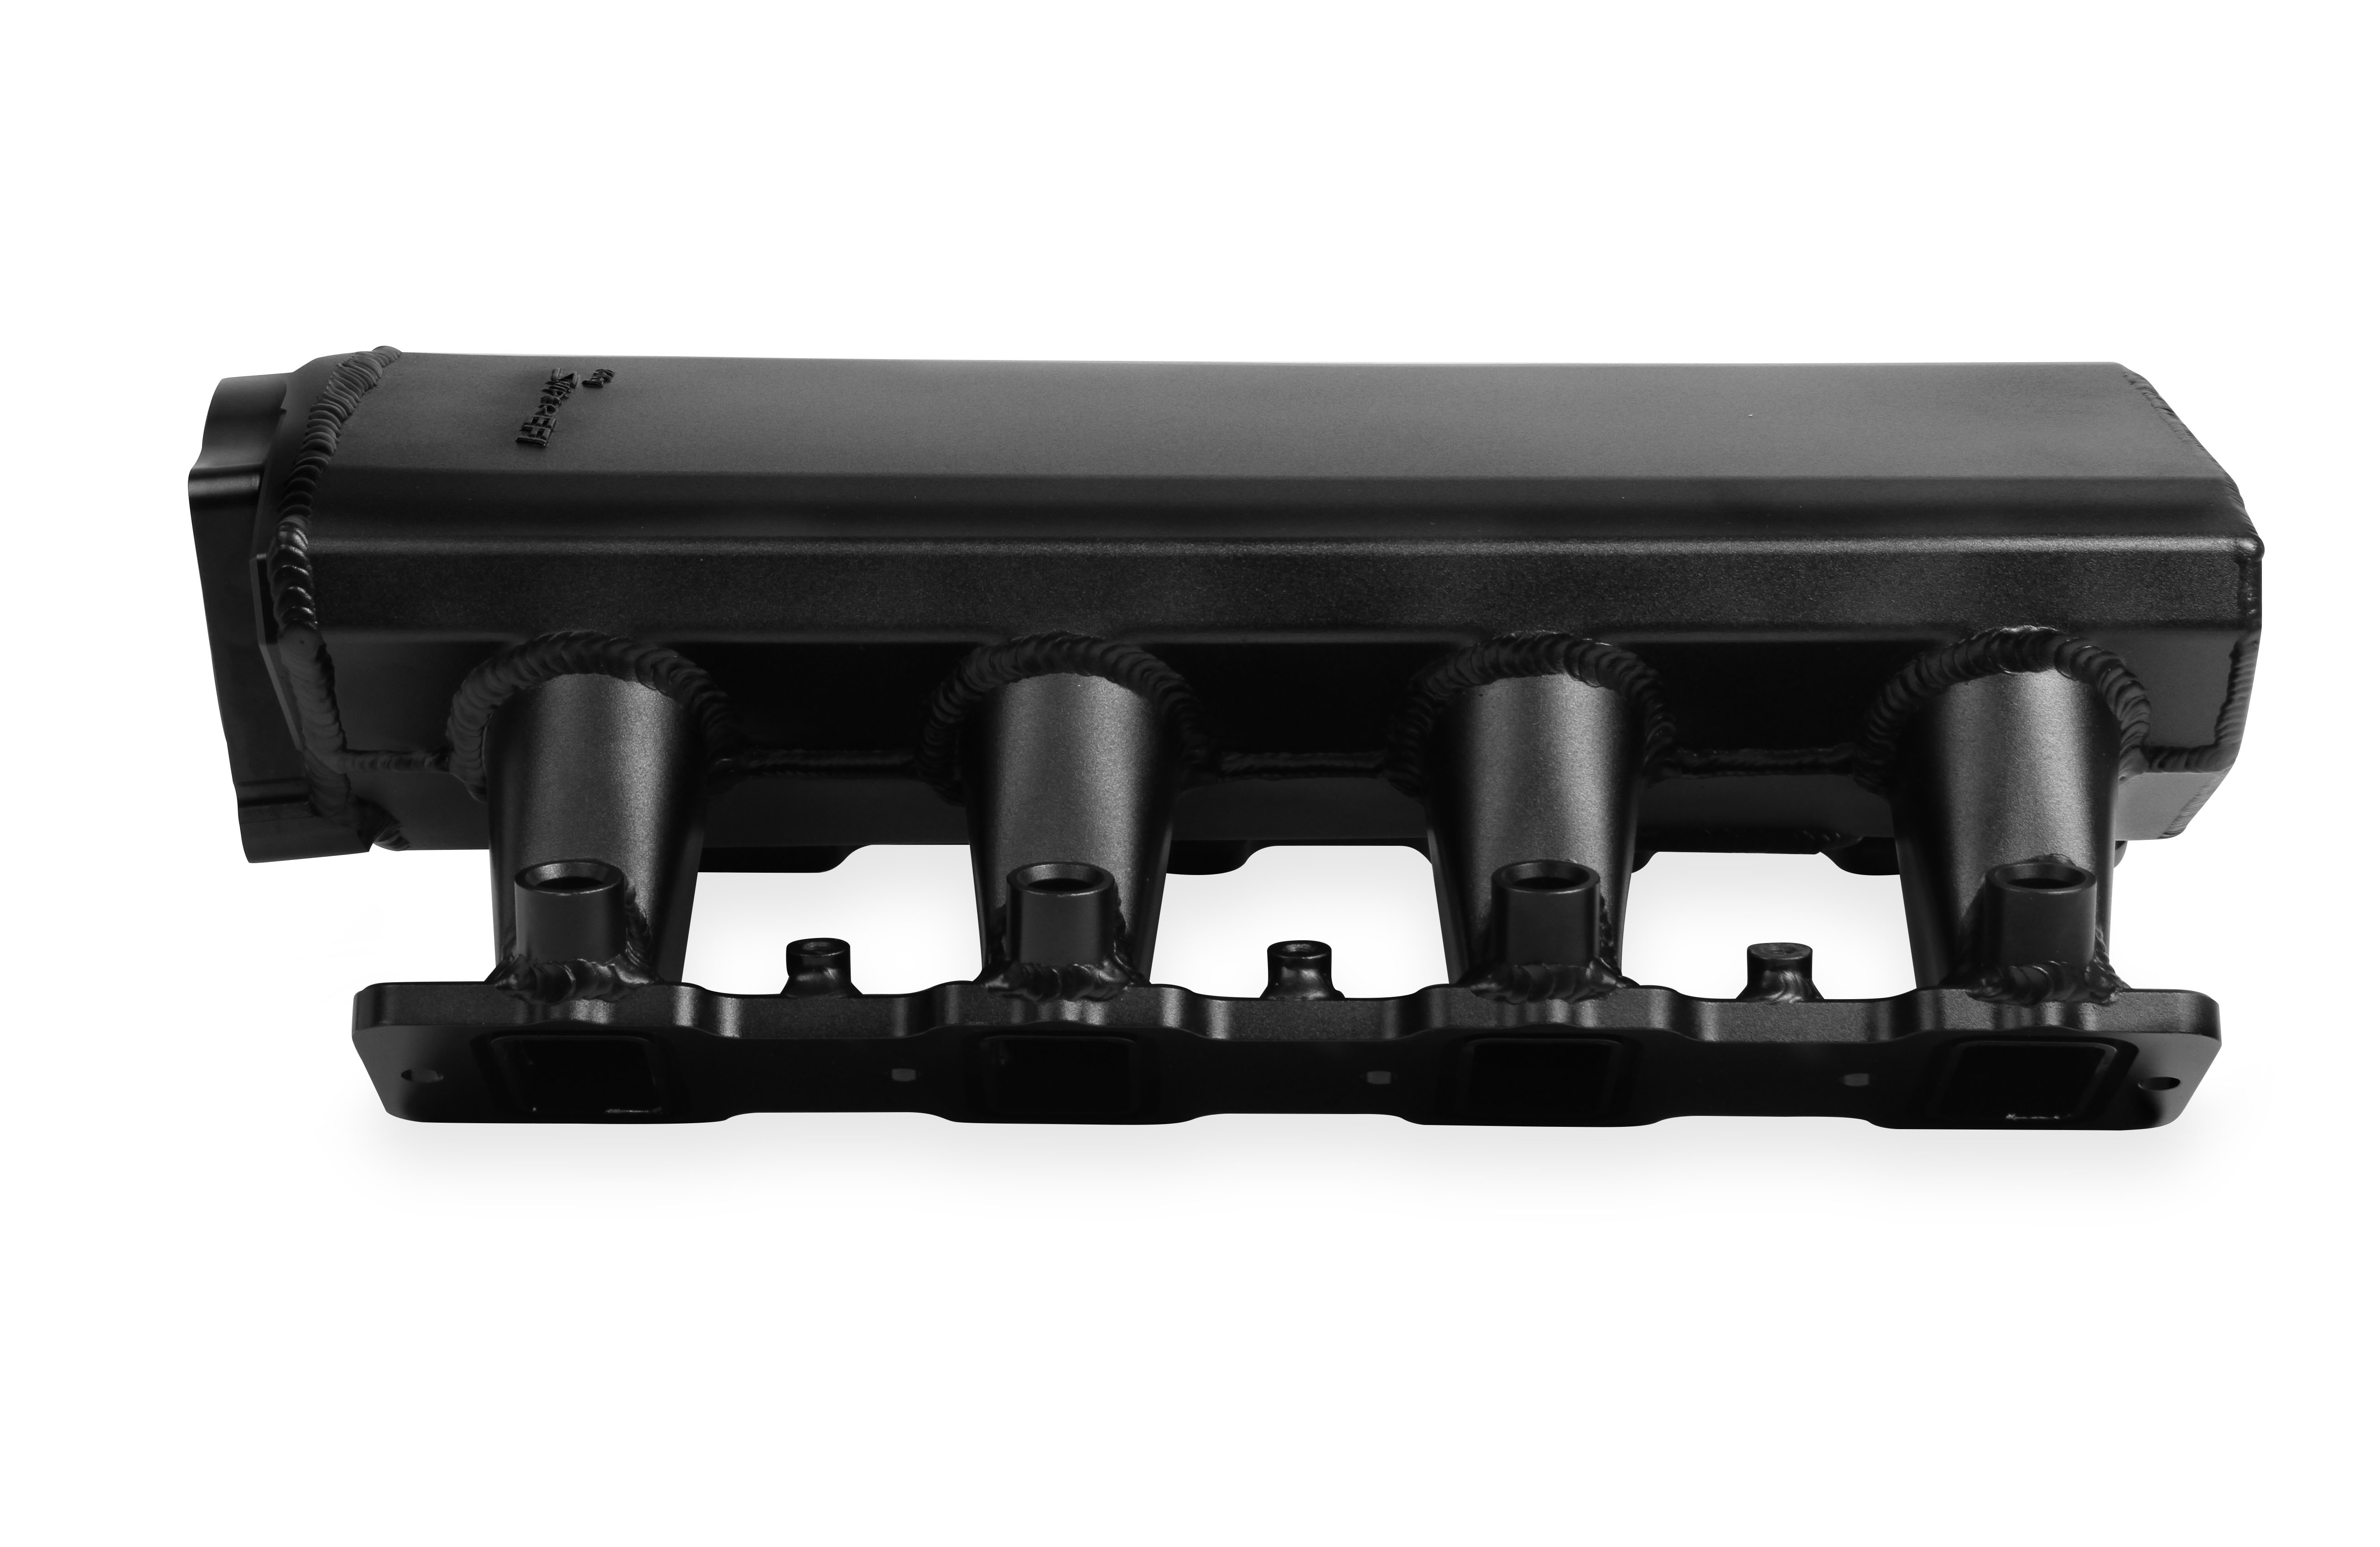 LS3/L92 Holley 92mm Sniper EFI Low-Profile Sheet Metal Fabricated Intake Manifold w/Fuel Rail Kit - Black